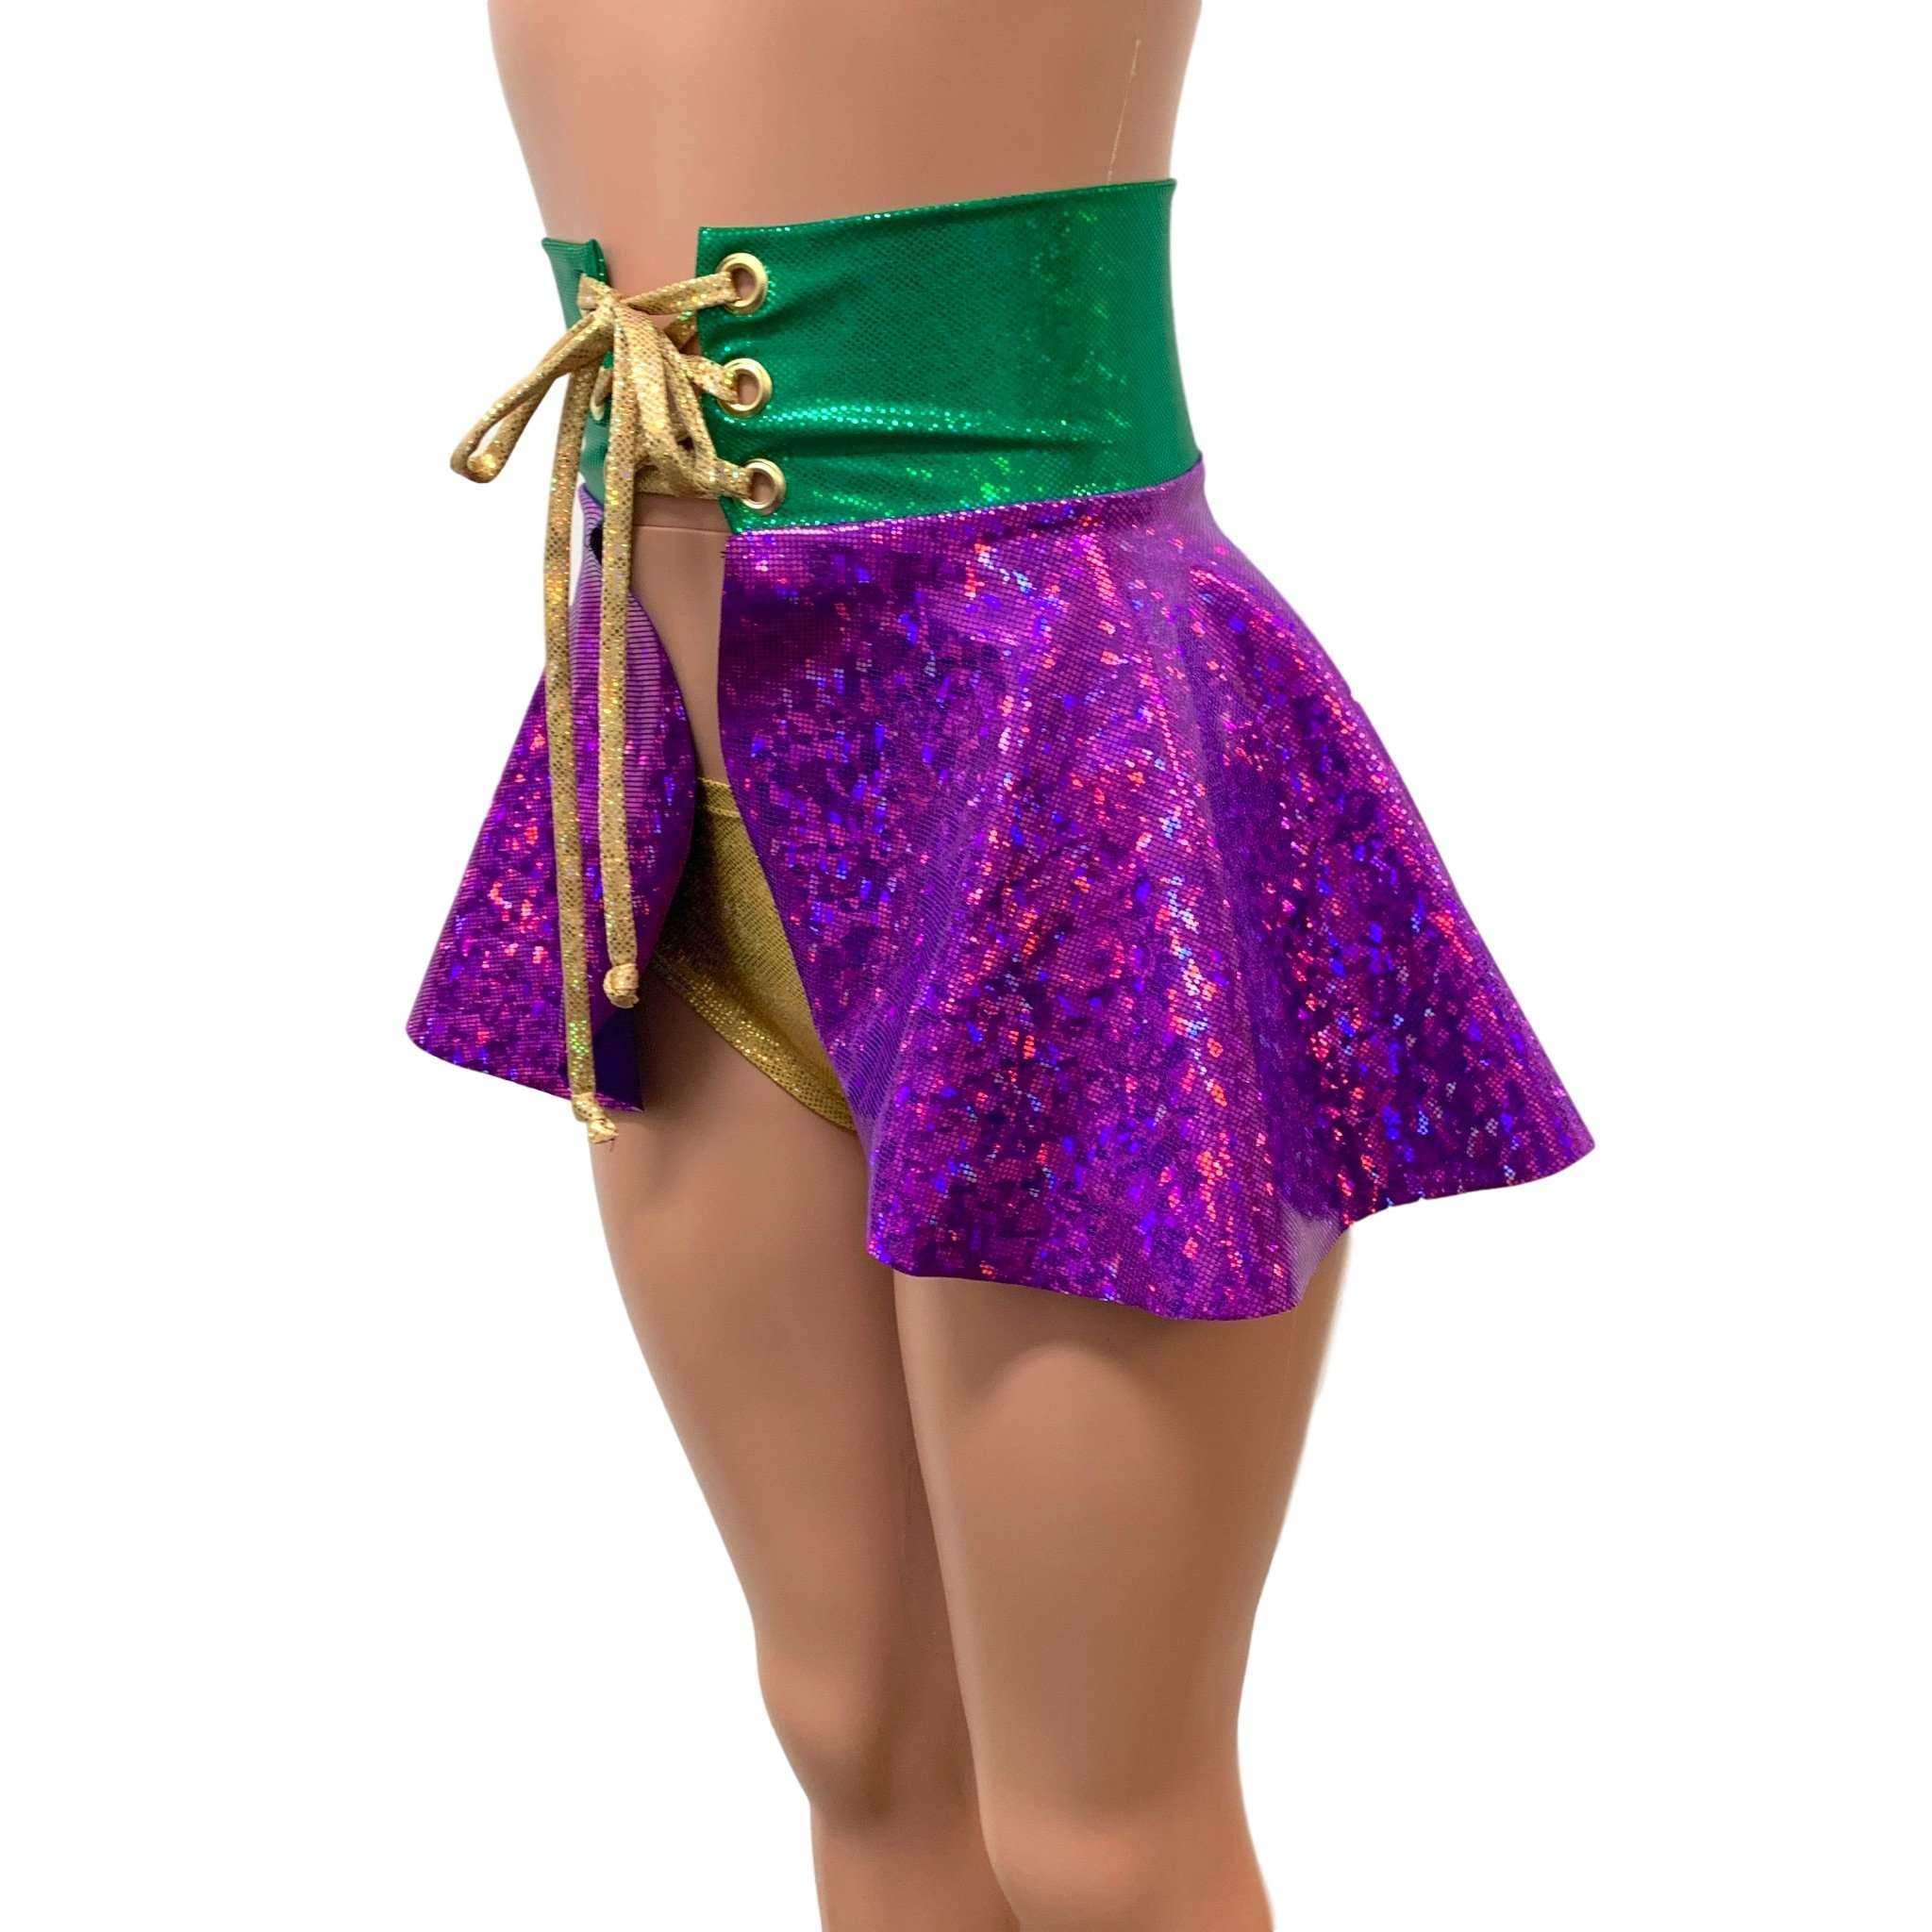 Mardi Gras Corset Skirt - Holographic Lace-Up Skater Skirt